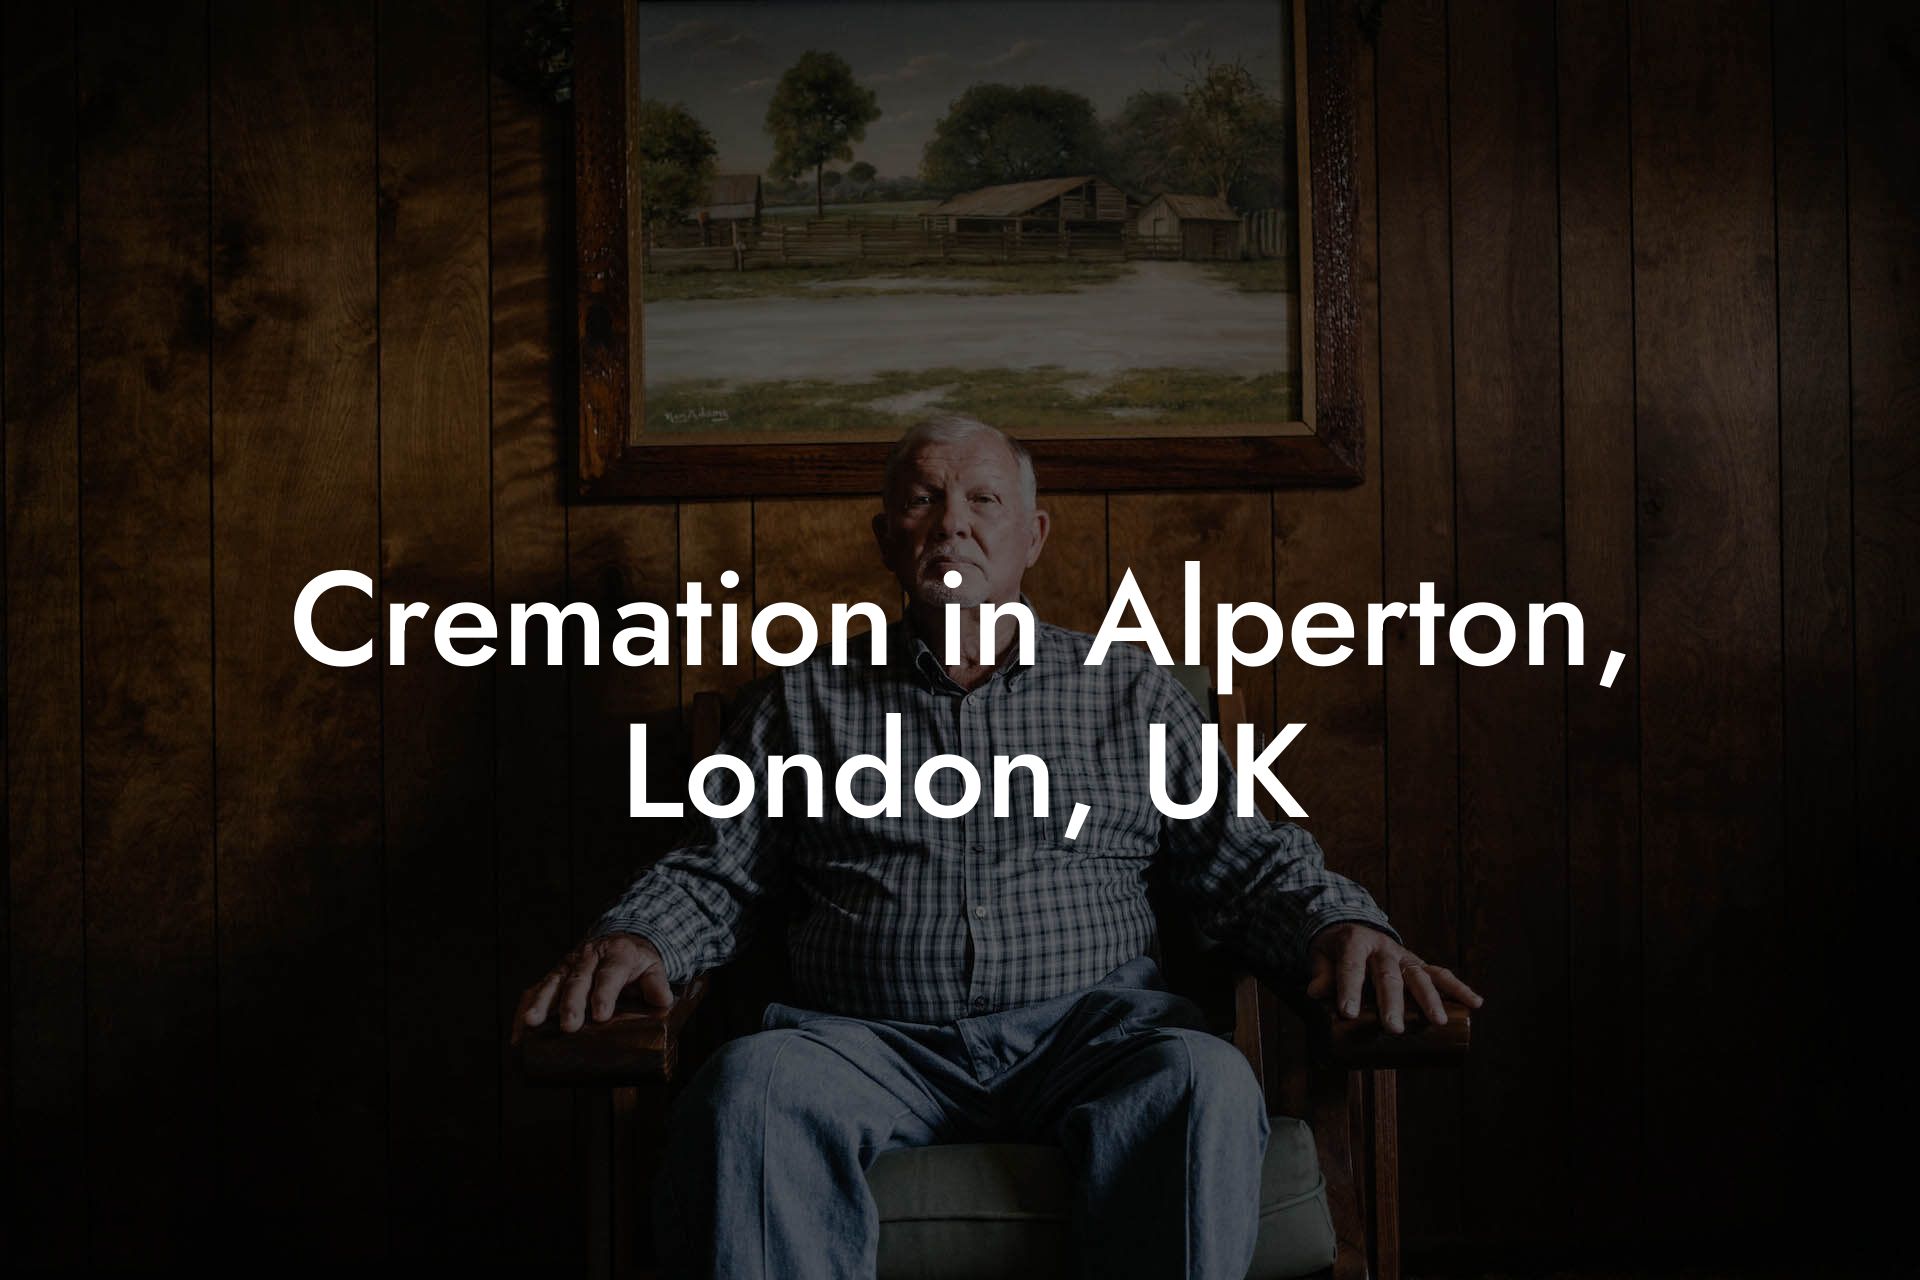 Cremation in Alperton, London, UK